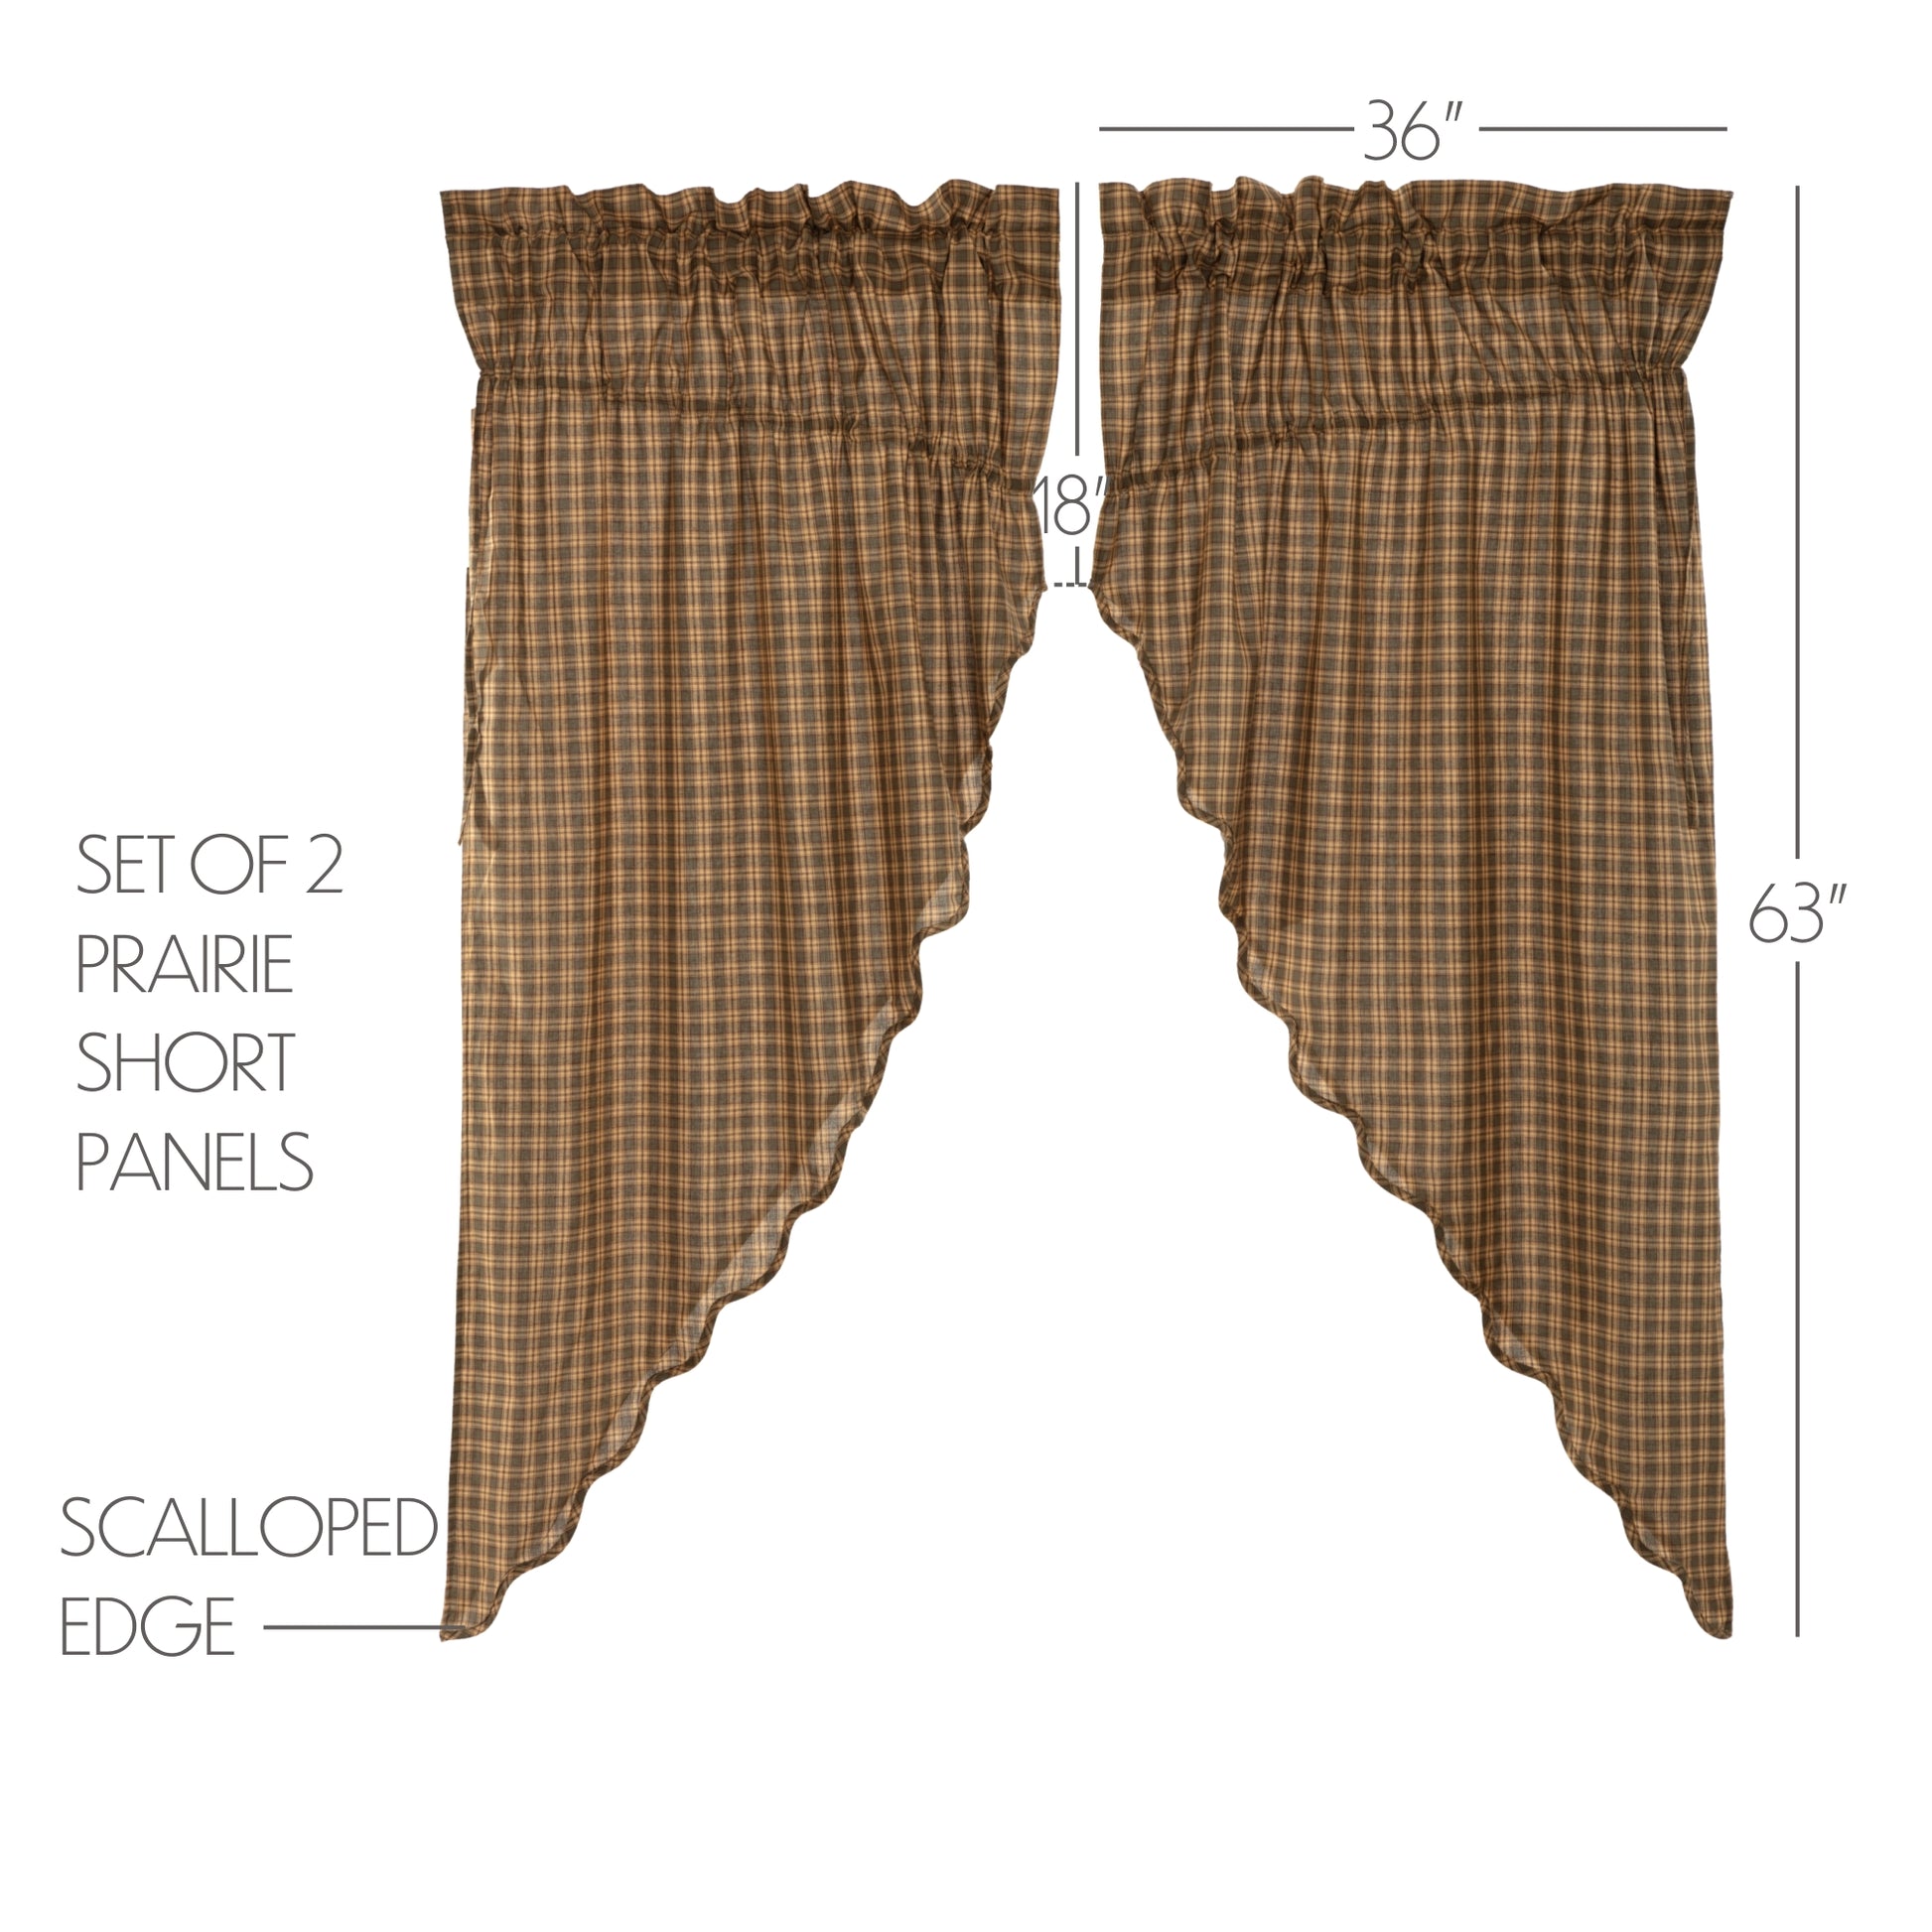 53717-Cedar-Ridge-Prairie-Short-Panel-Scalloped-Set-of-2-63x36x18-image-1